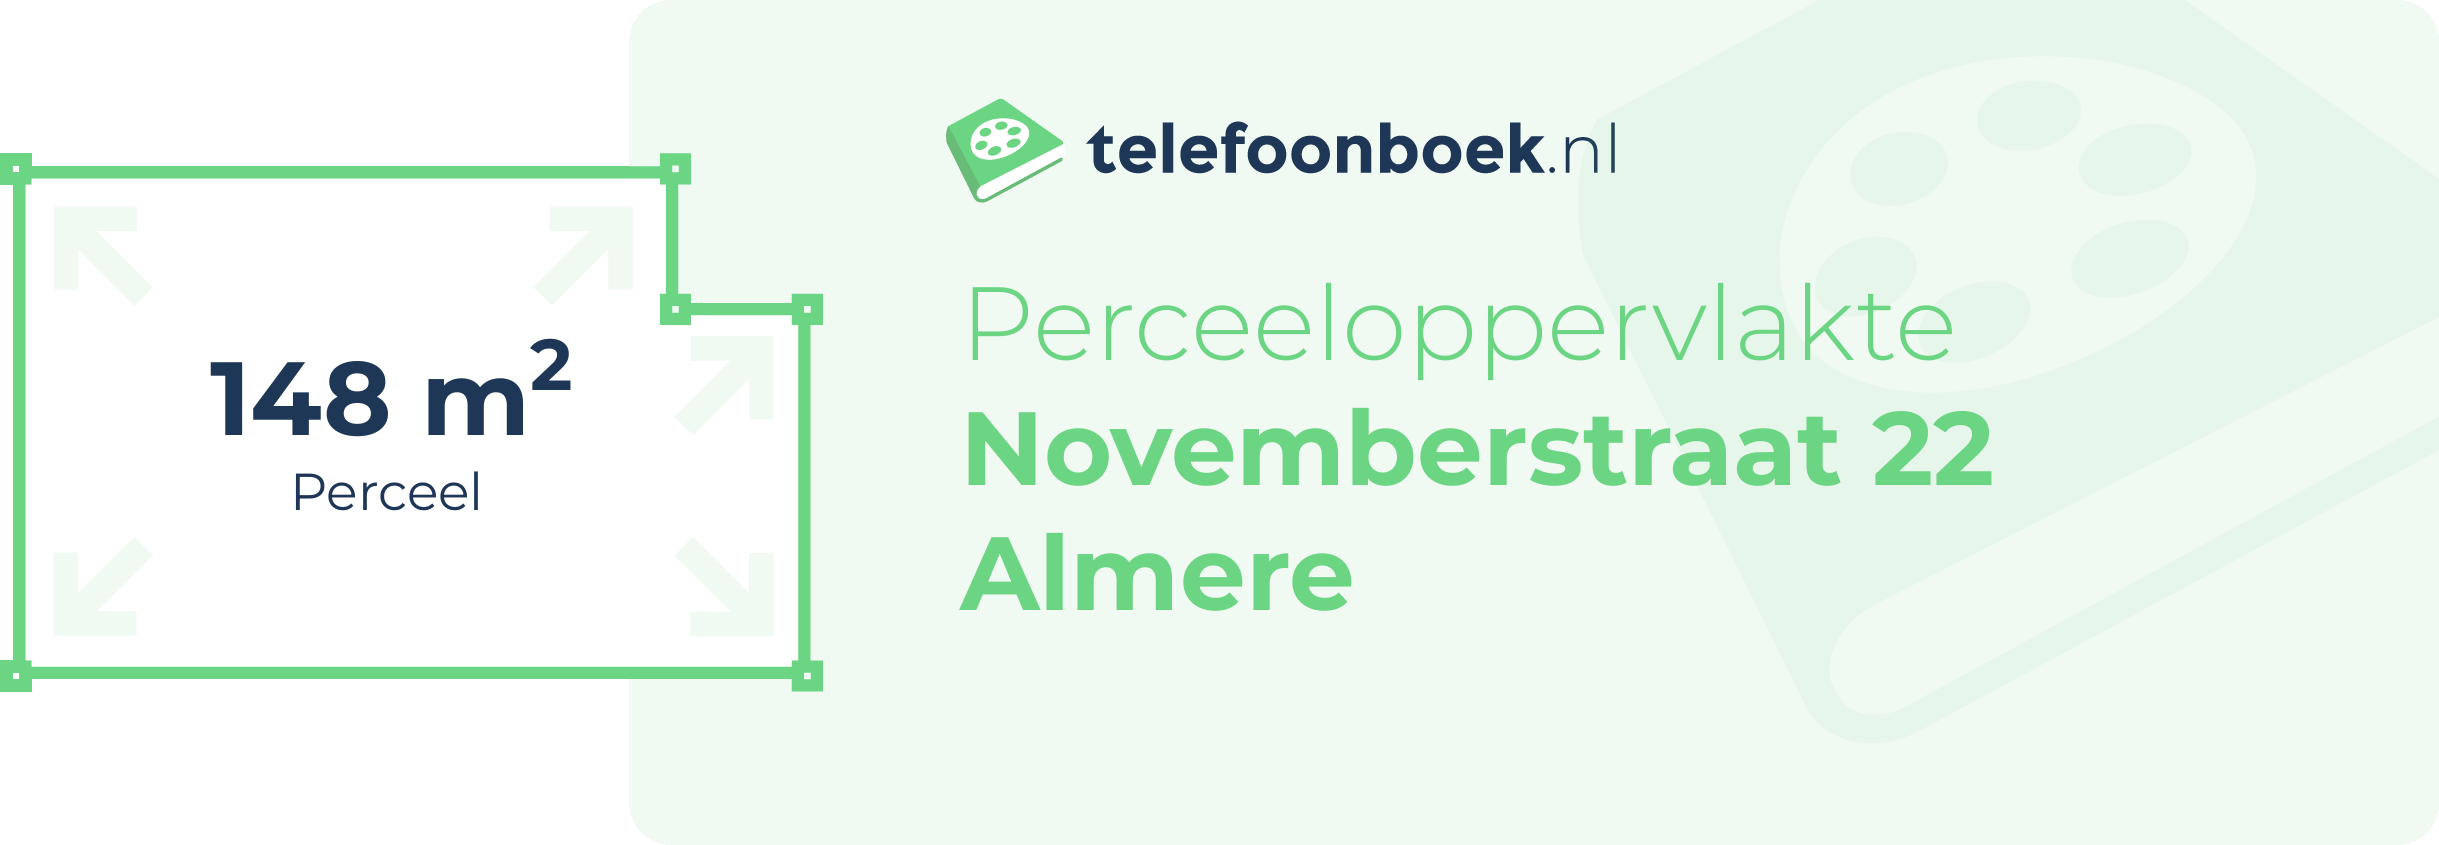 Perceeloppervlakte Novemberstraat 22 Almere